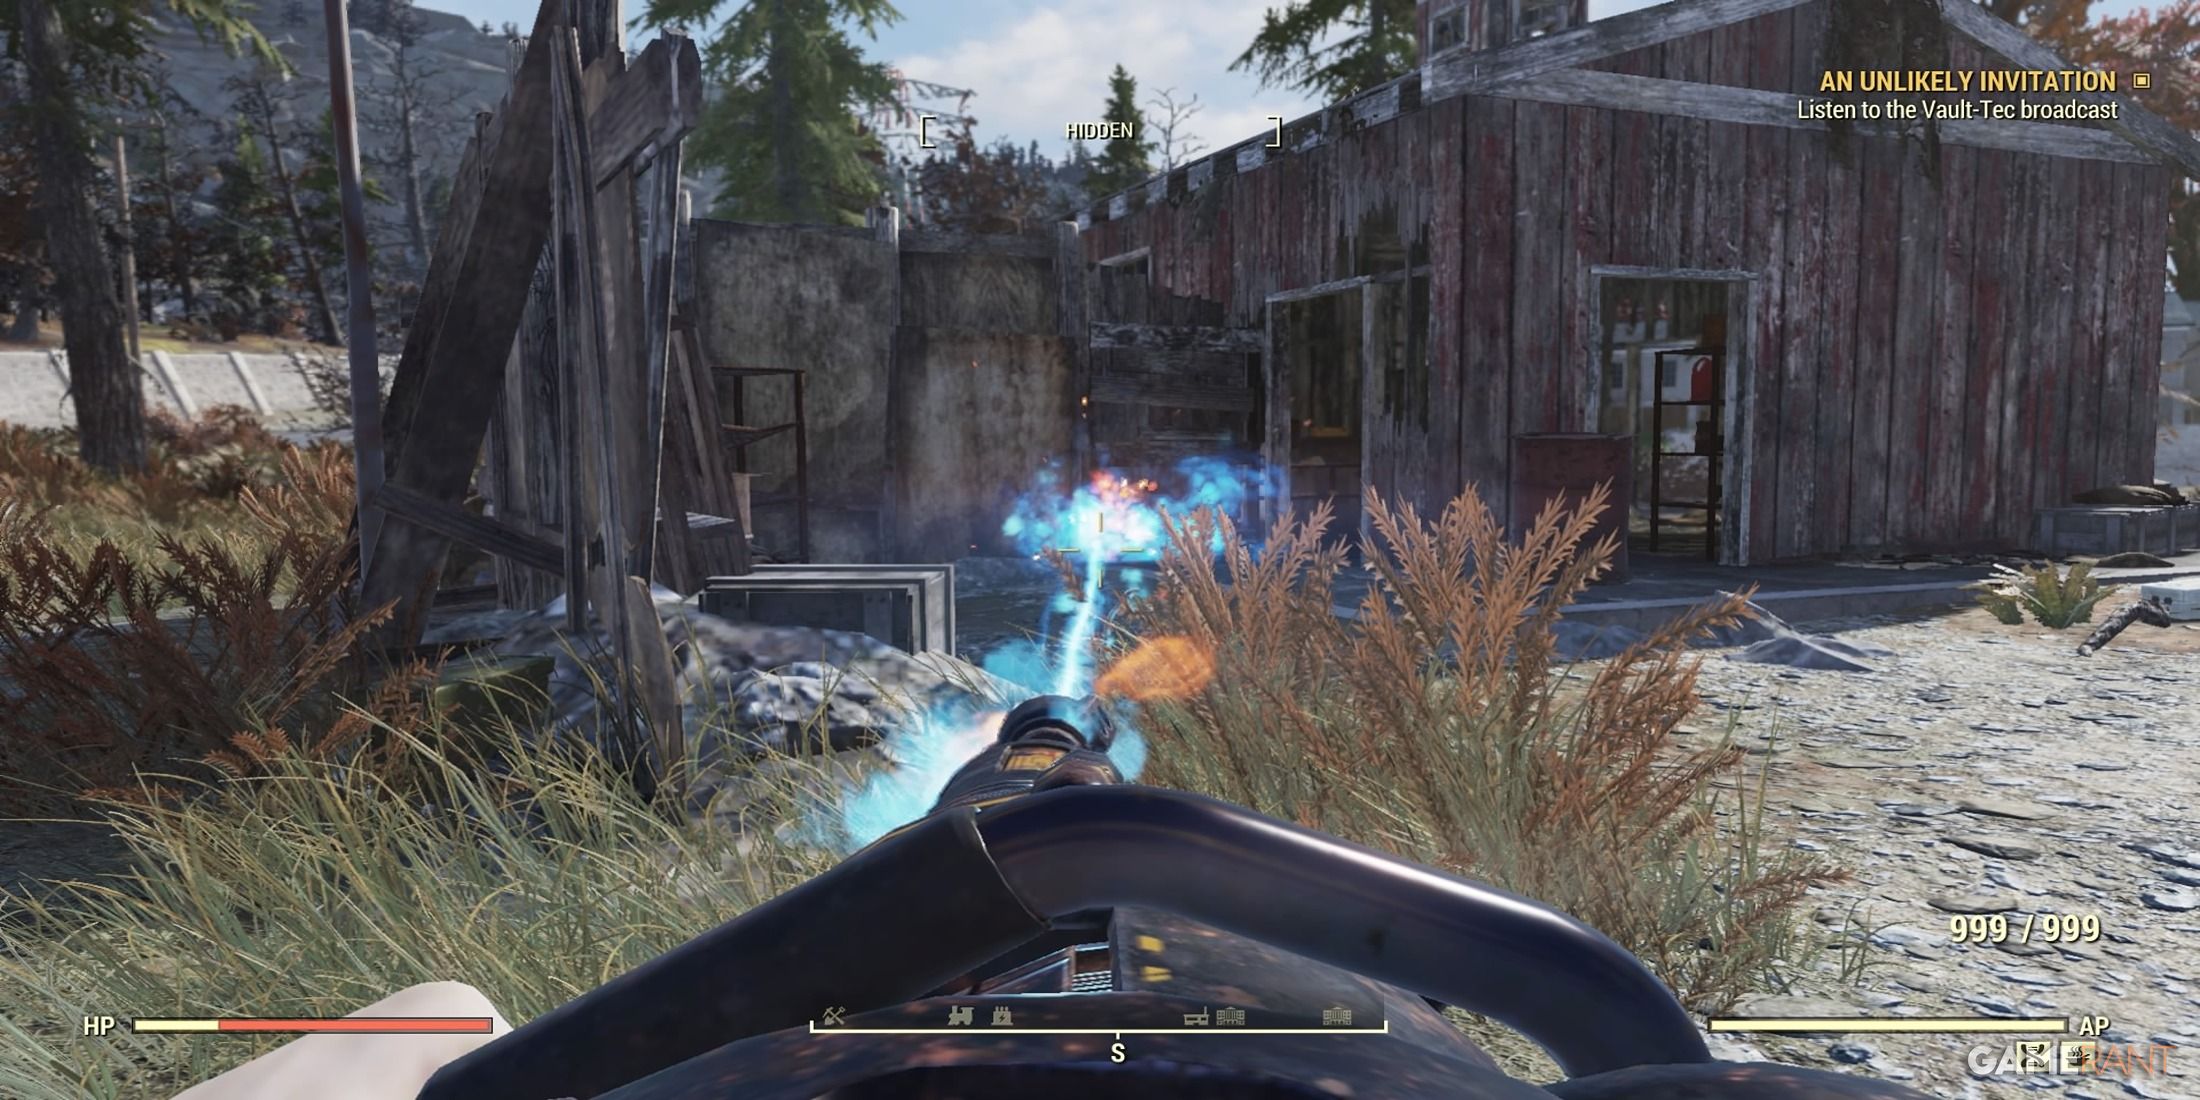 Shooting A Gauss Minigun in Fallout 76